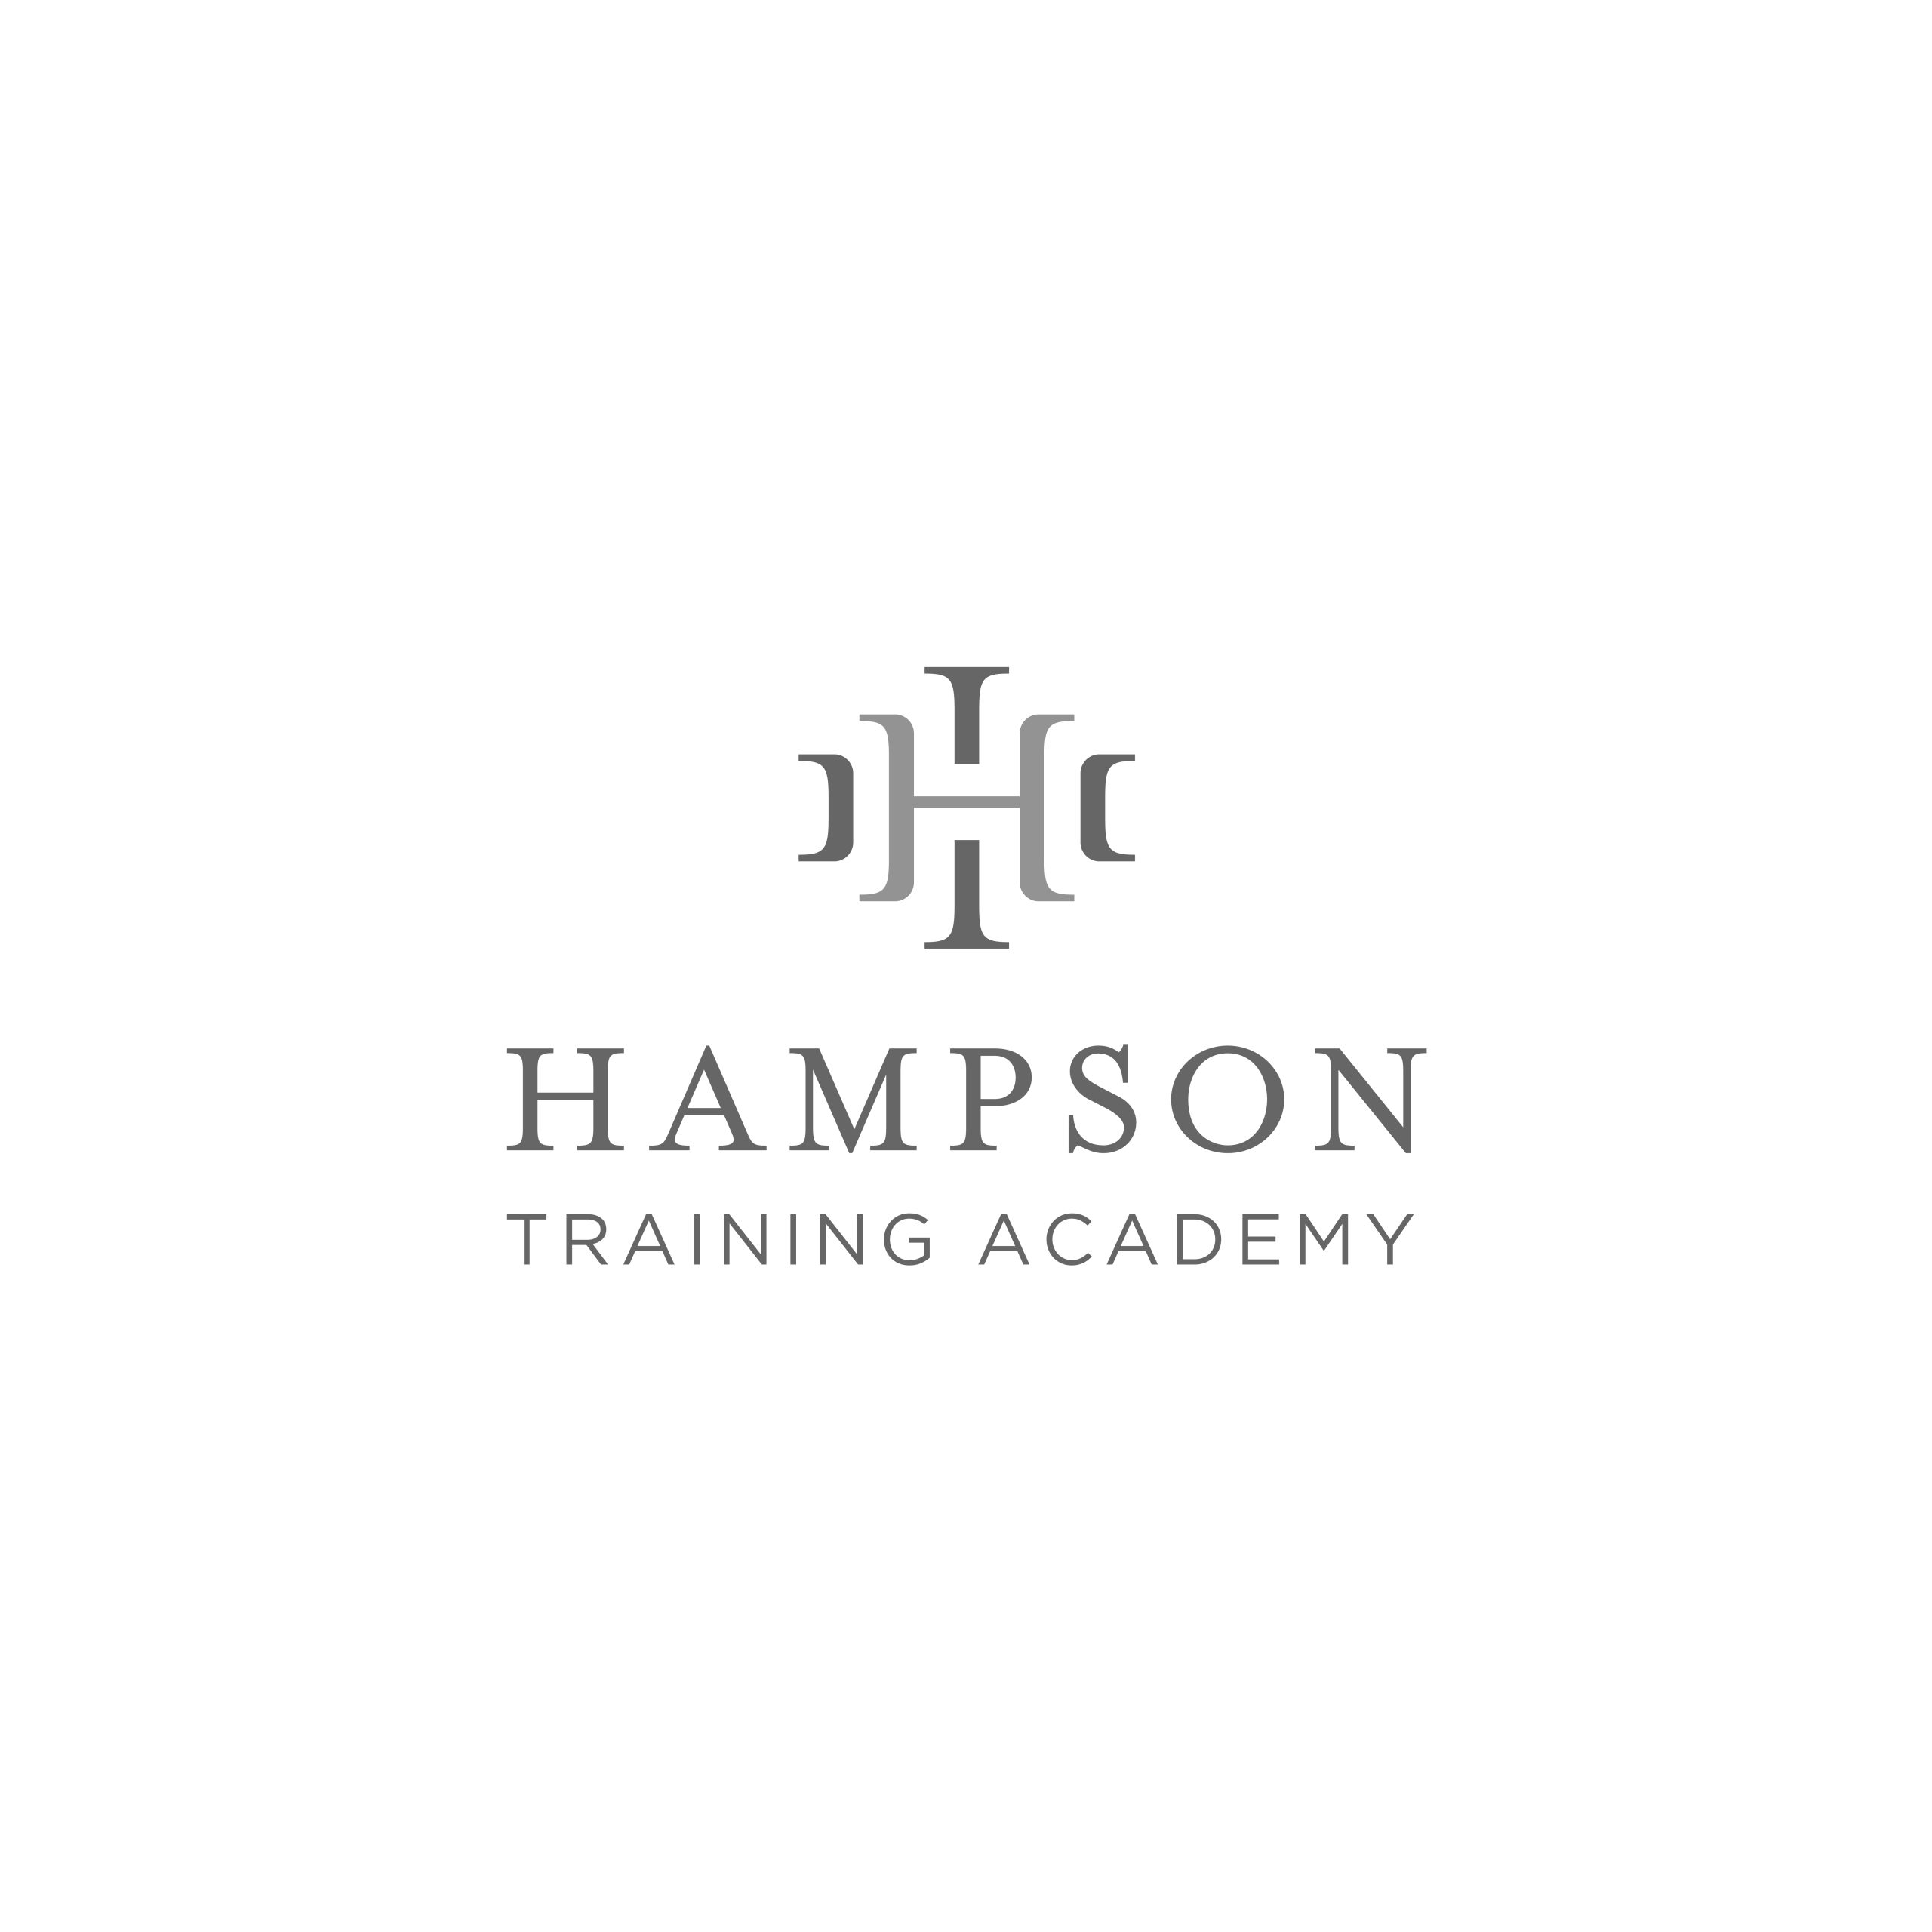 Hampson Training Academy